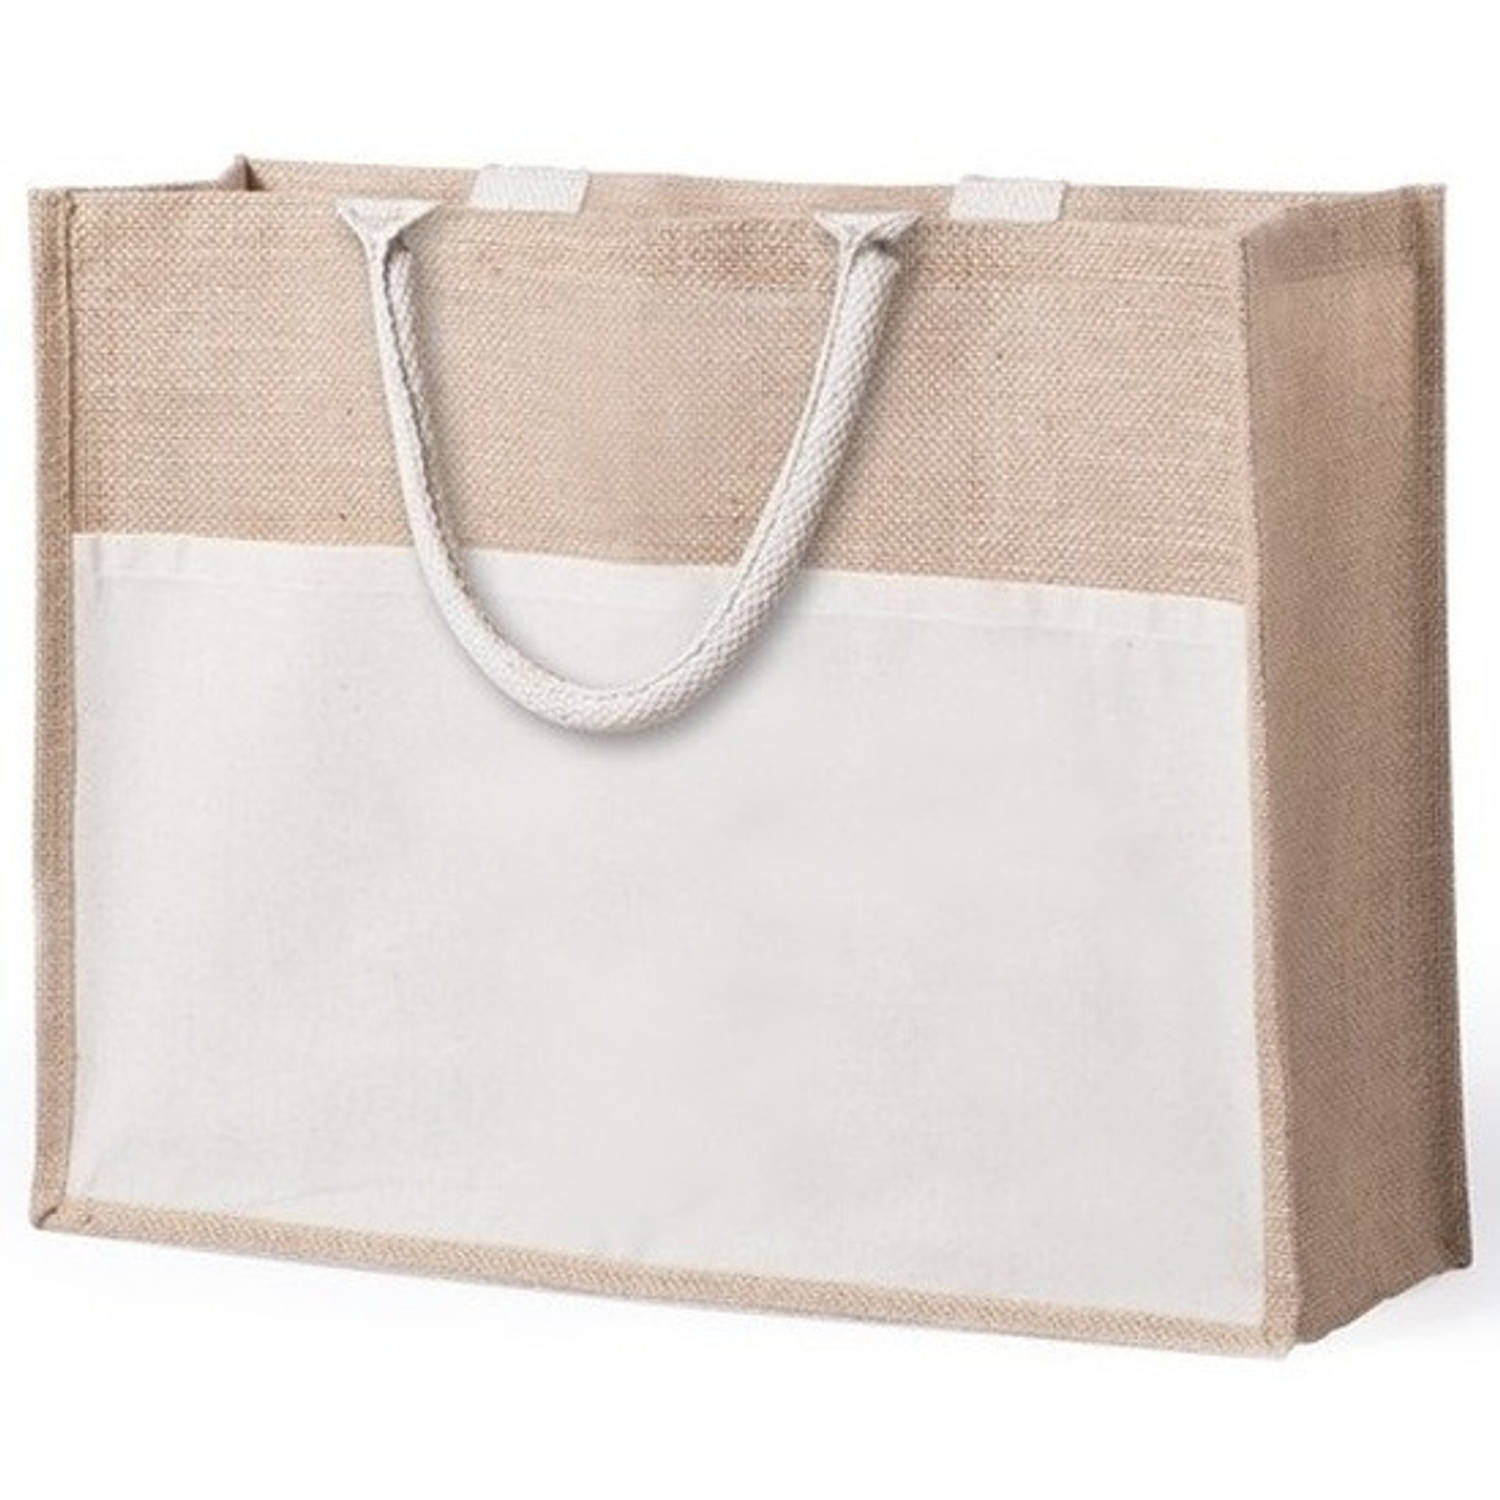 Jute/katoenen Naturel Shopper/boodschappen Tas 44,5 Cm - Stevige Boodschappentassen/shopper Bag - Beige